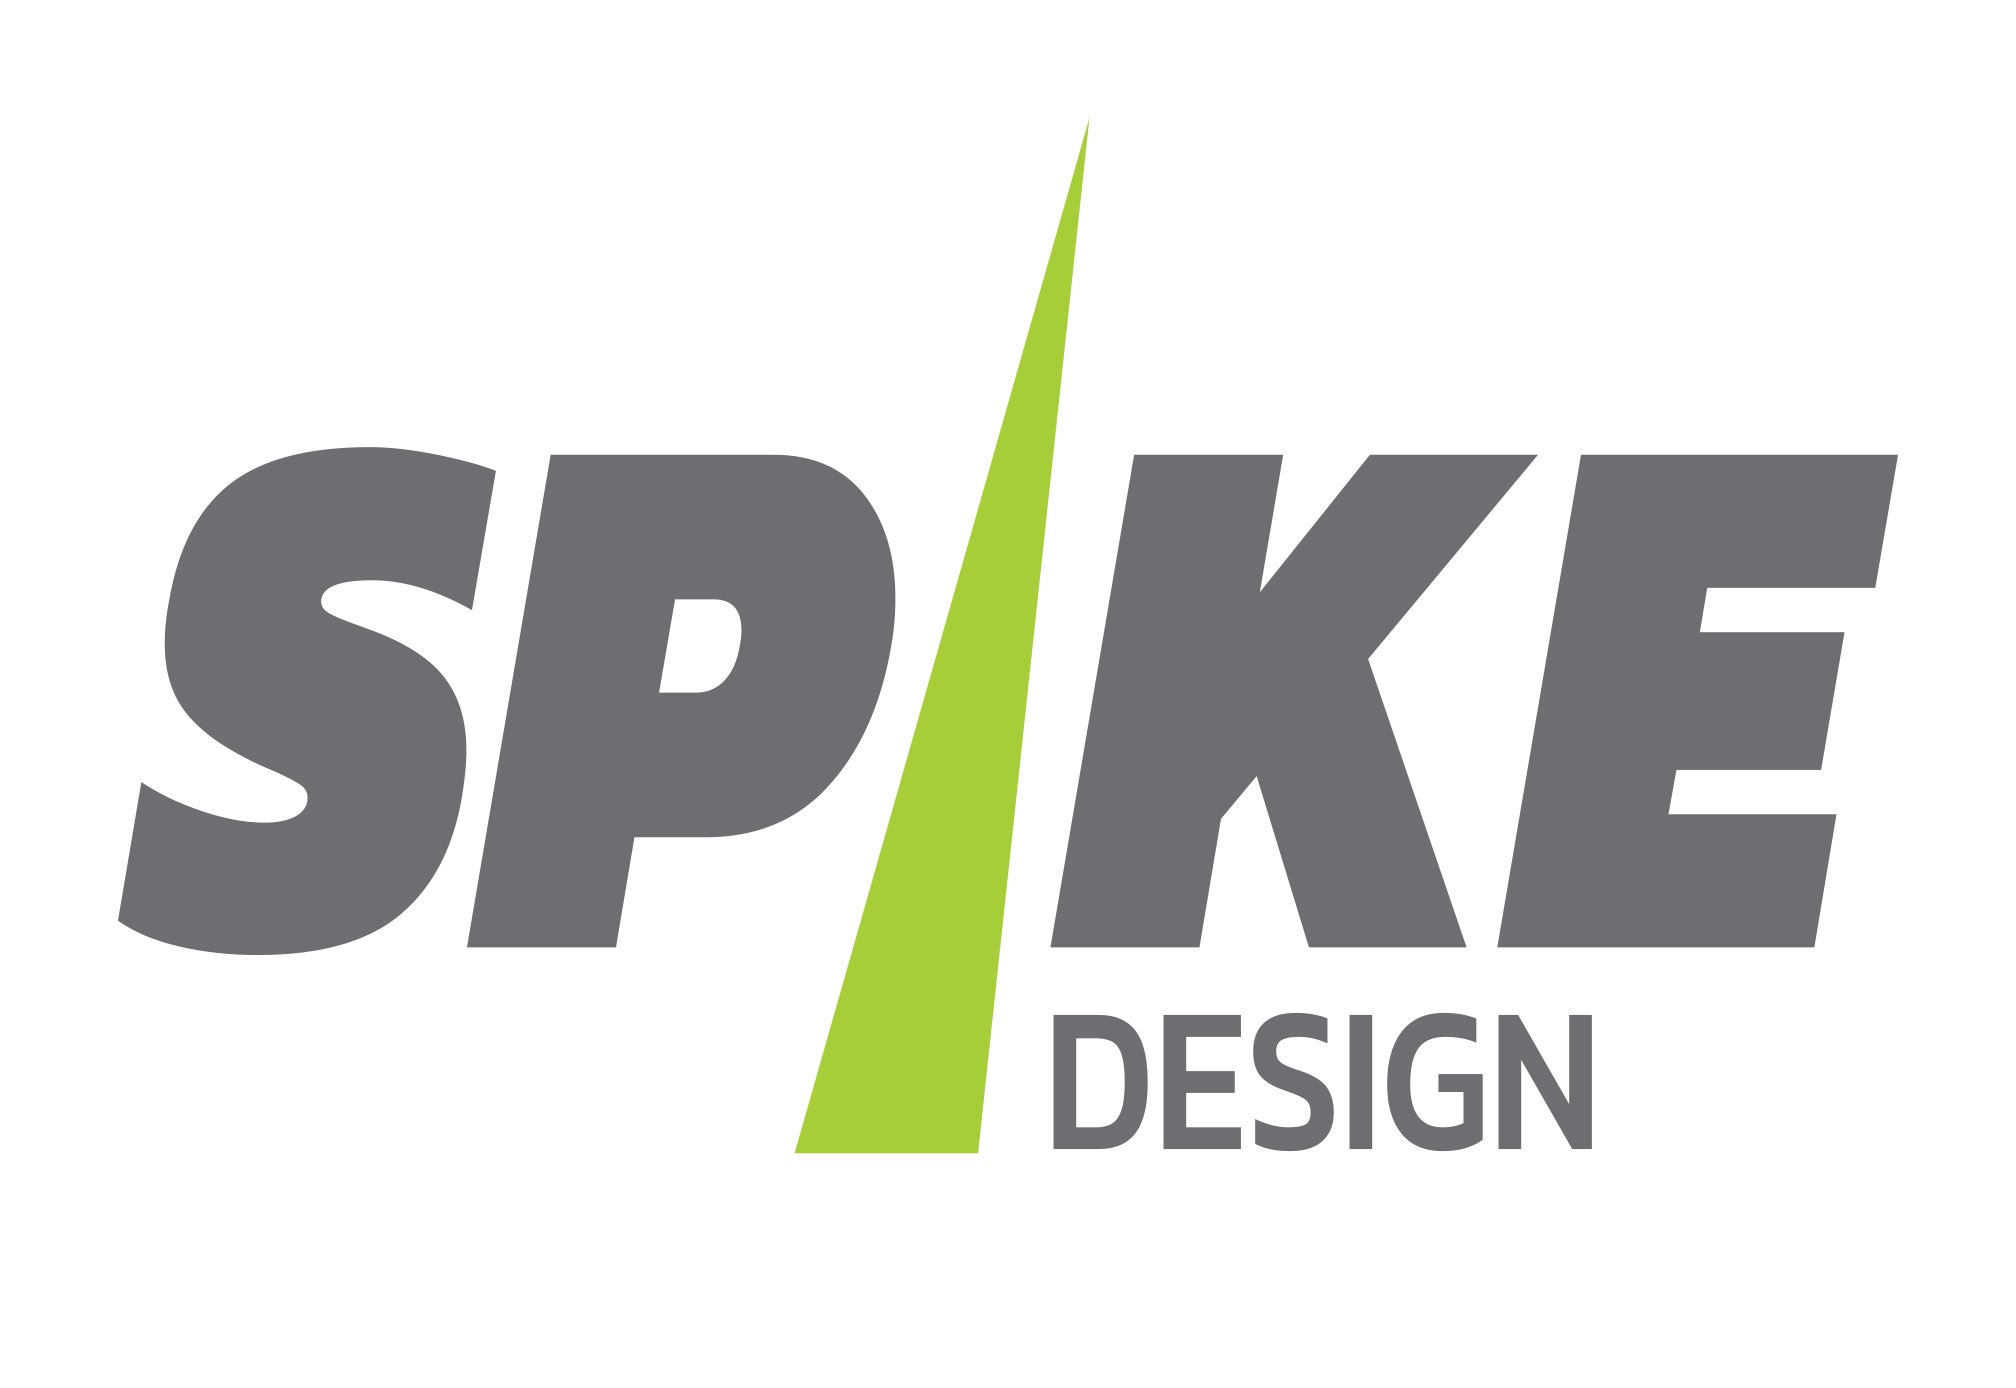 SPike Design